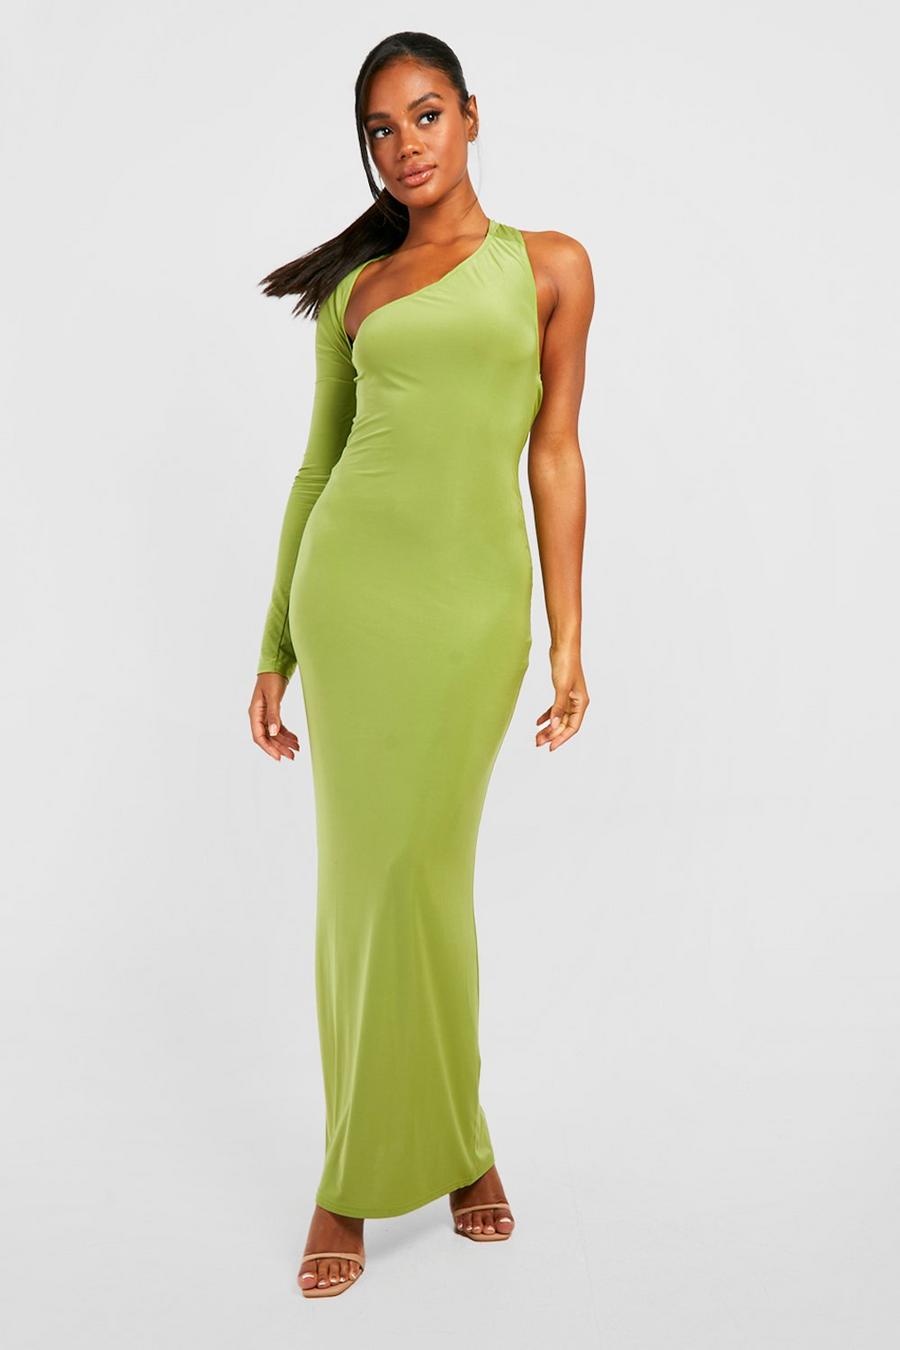 Olive green Premium Slinky Asymmetric One Shoulder Maxi Dress